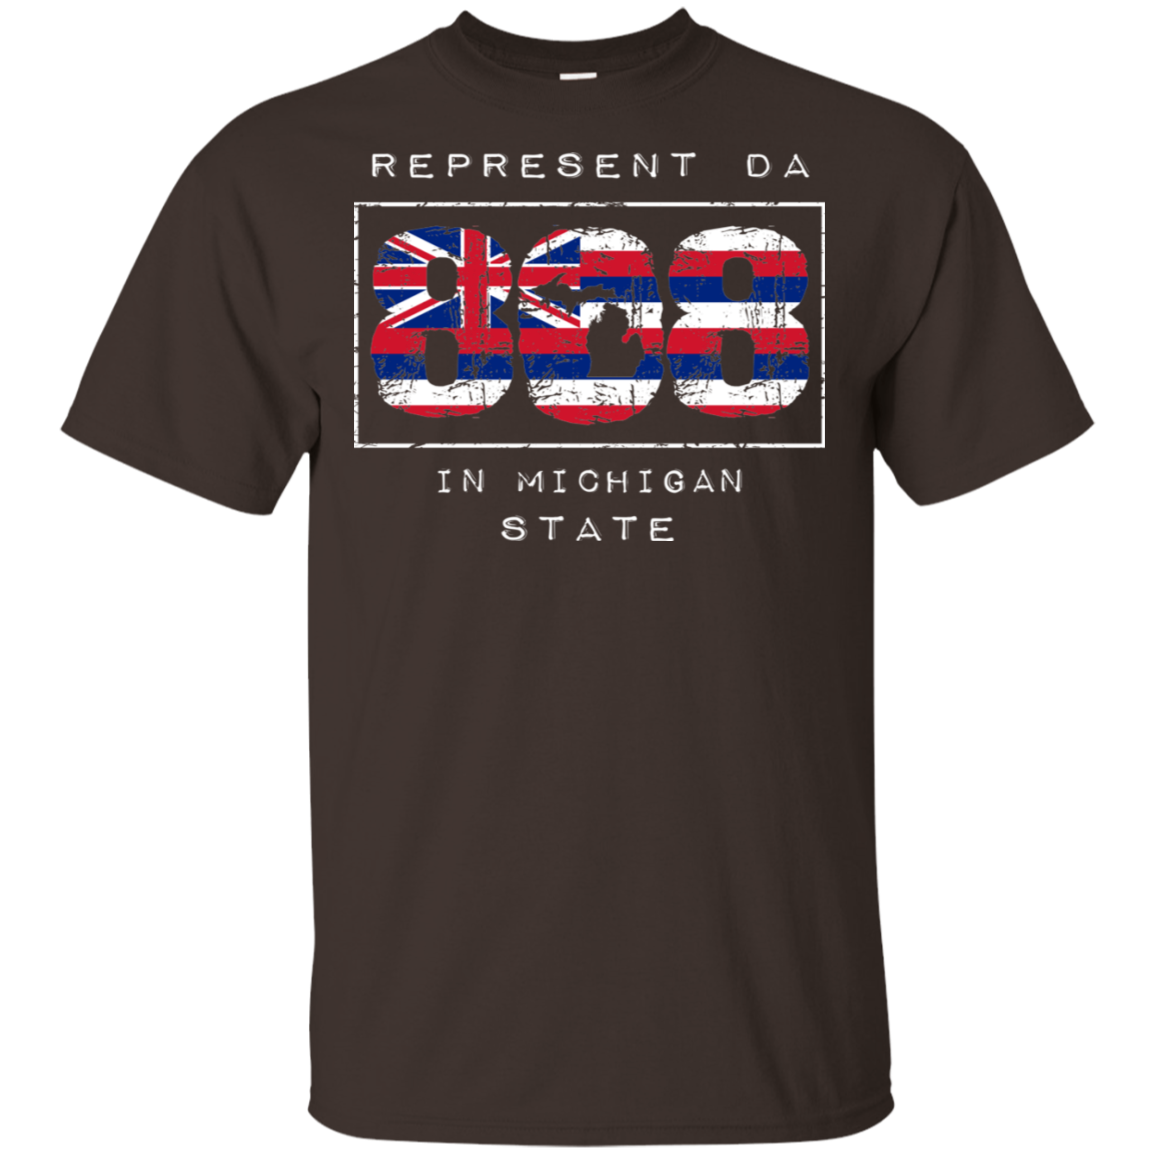 Rep Da 808 In Michigan State Ultra Cotton T-Shirt, T-Shirts, Hawaii Nei All Day